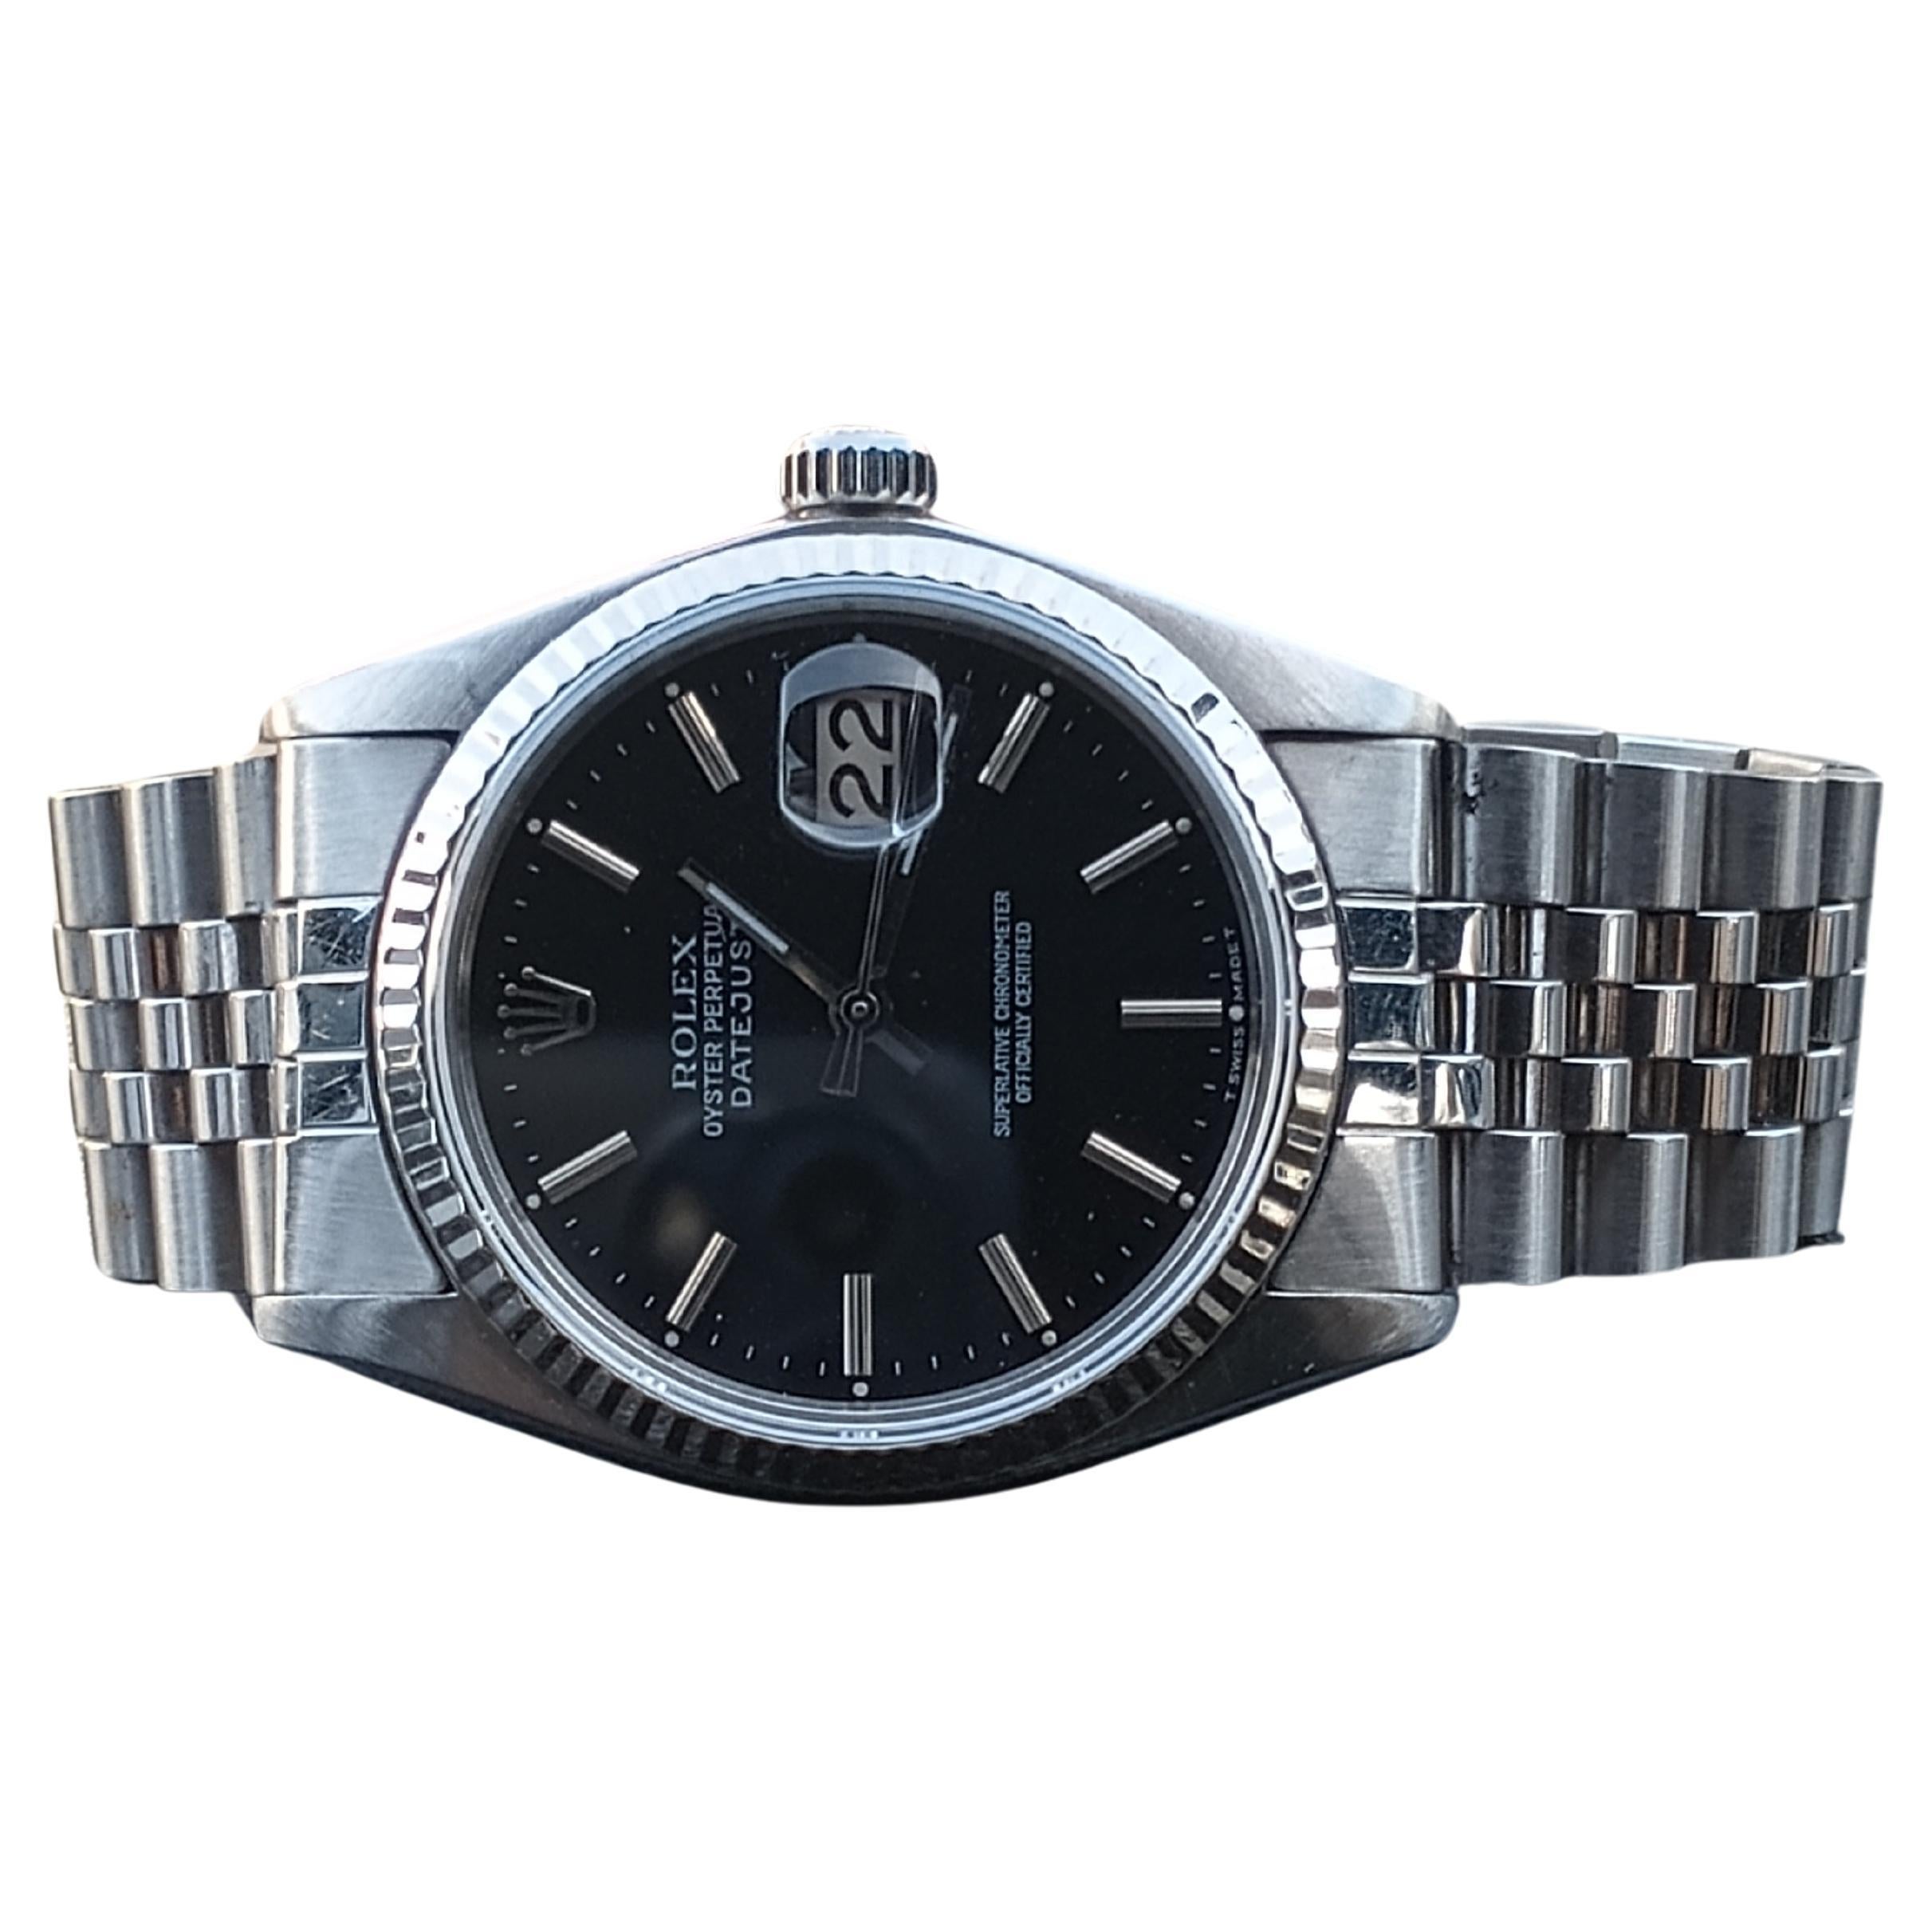 Rolex Datejust Factory Original Black Dial ref 16014 For Sale